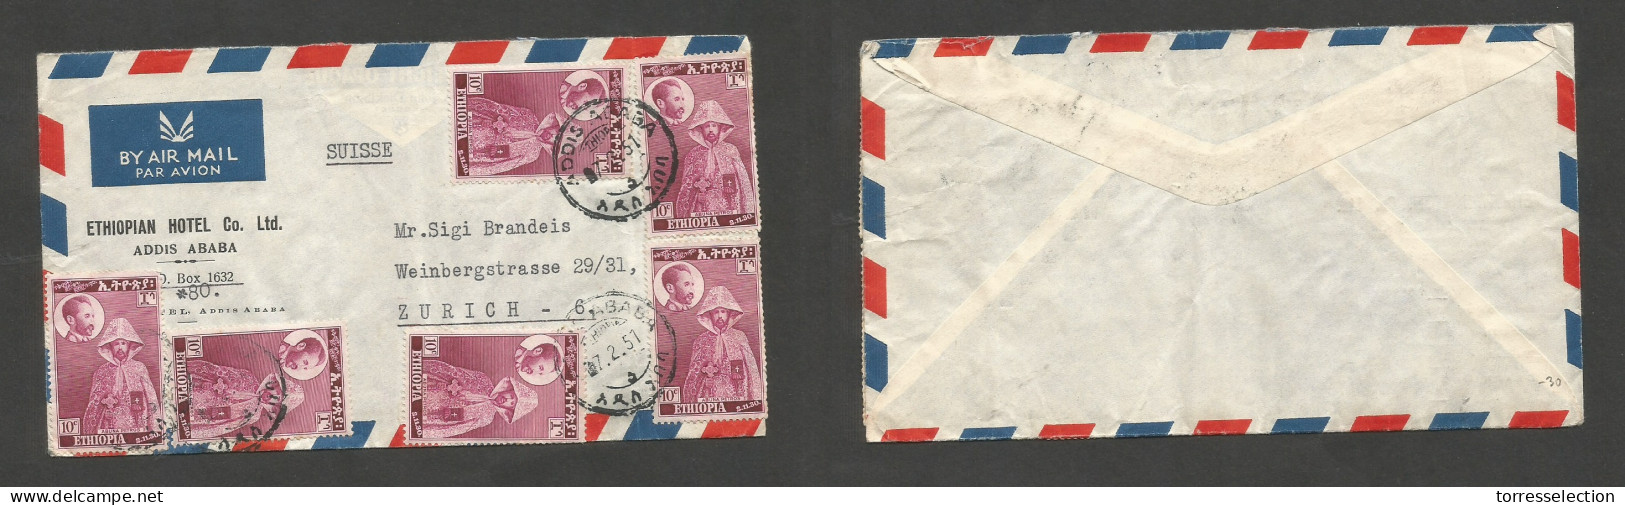 ETHIOPIA. 1951 (7 Febr) Addis Ababa - Zurich, Switzerland. Air Multifkd Env, Tied Cds, At 60c Rate. V. Appealing. - Etiopia